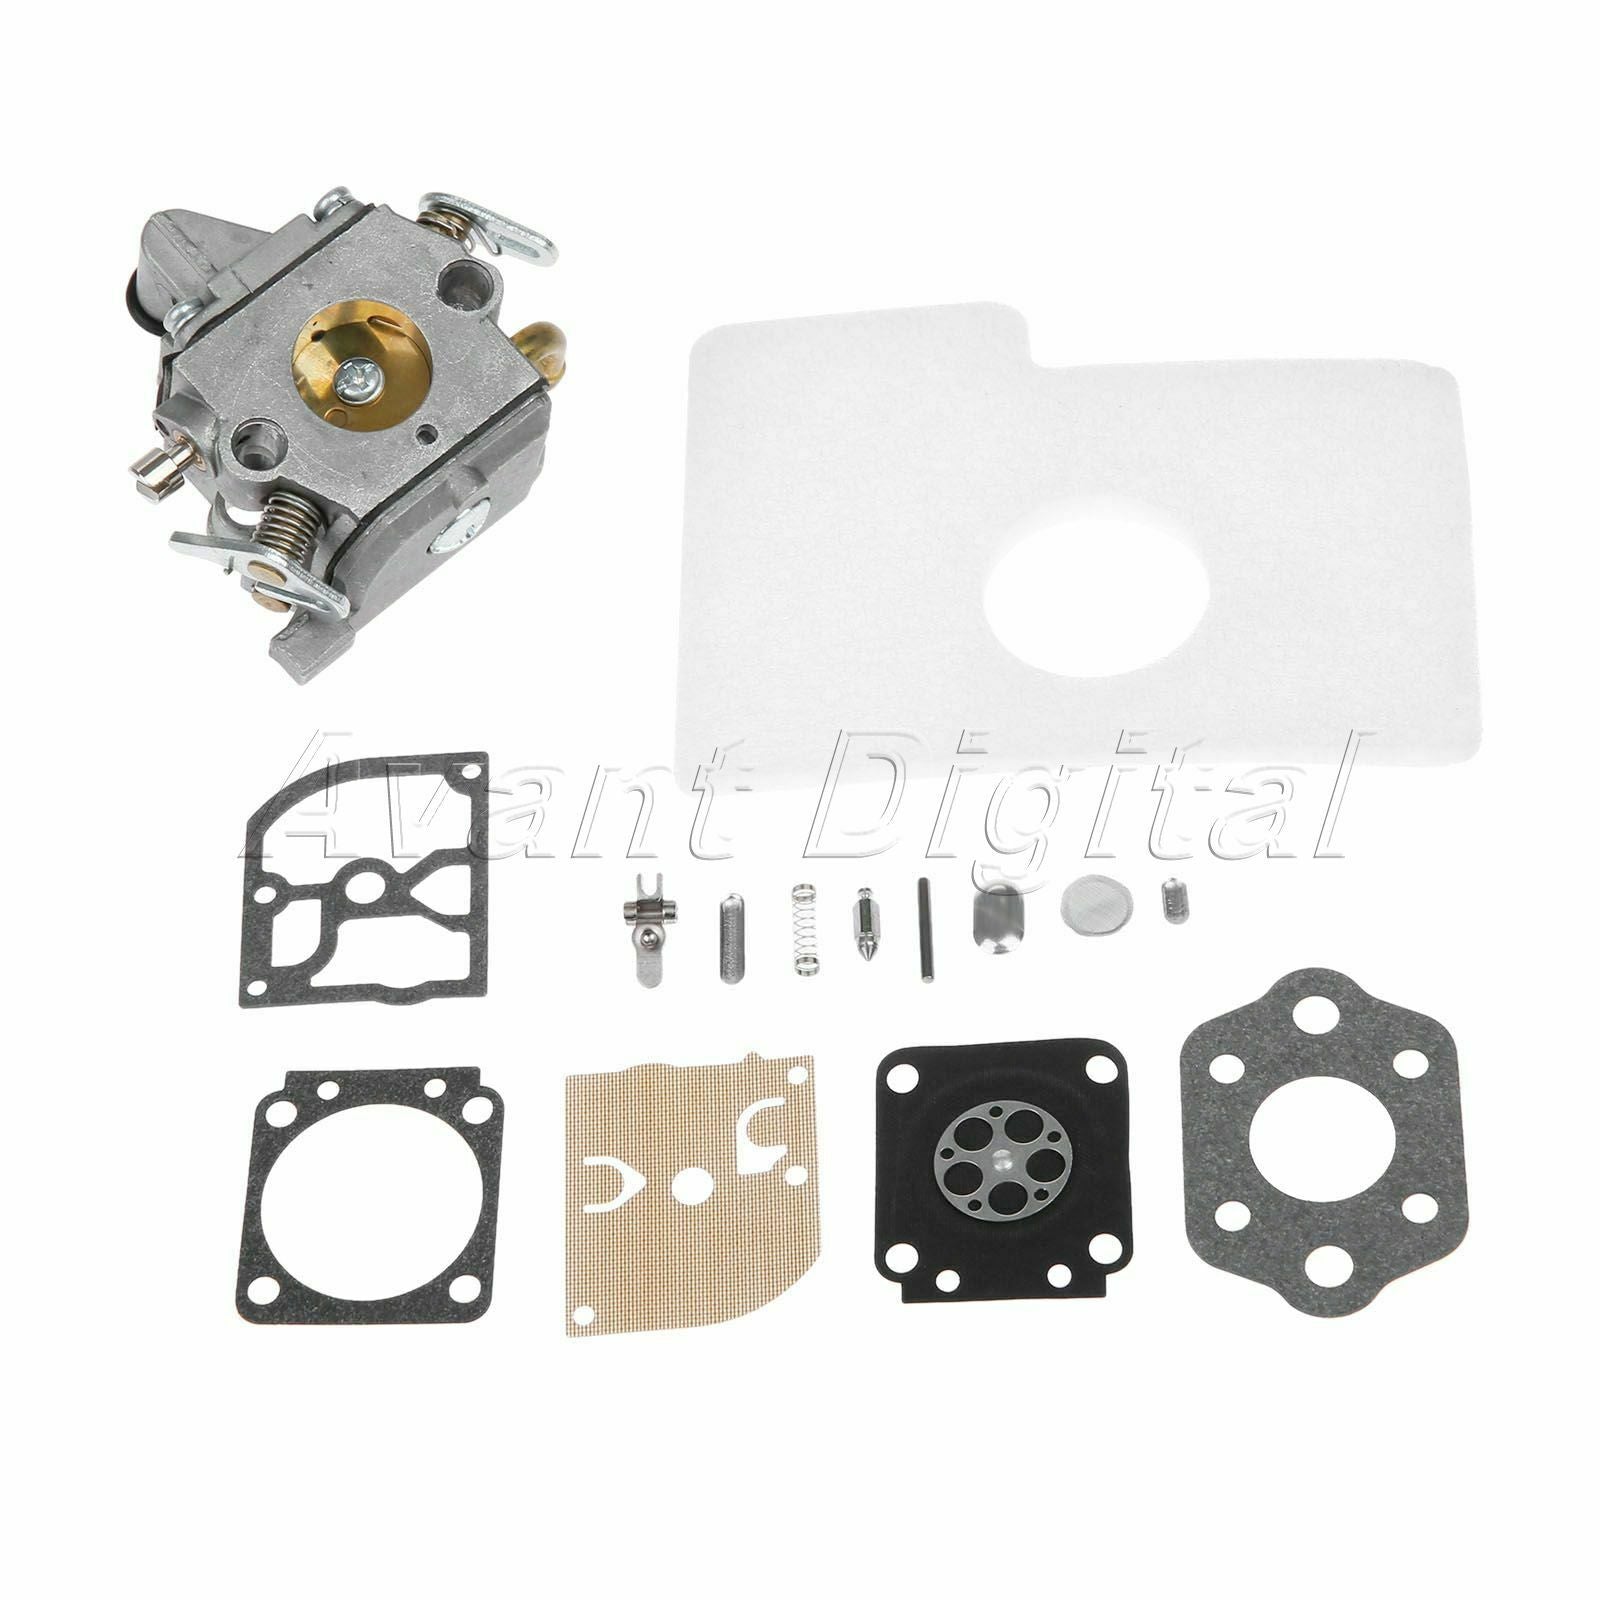 1 Set Carburetor CARB Rebuild Kit Chainsaw Parts For STIHL 017 018 MS170 MS180